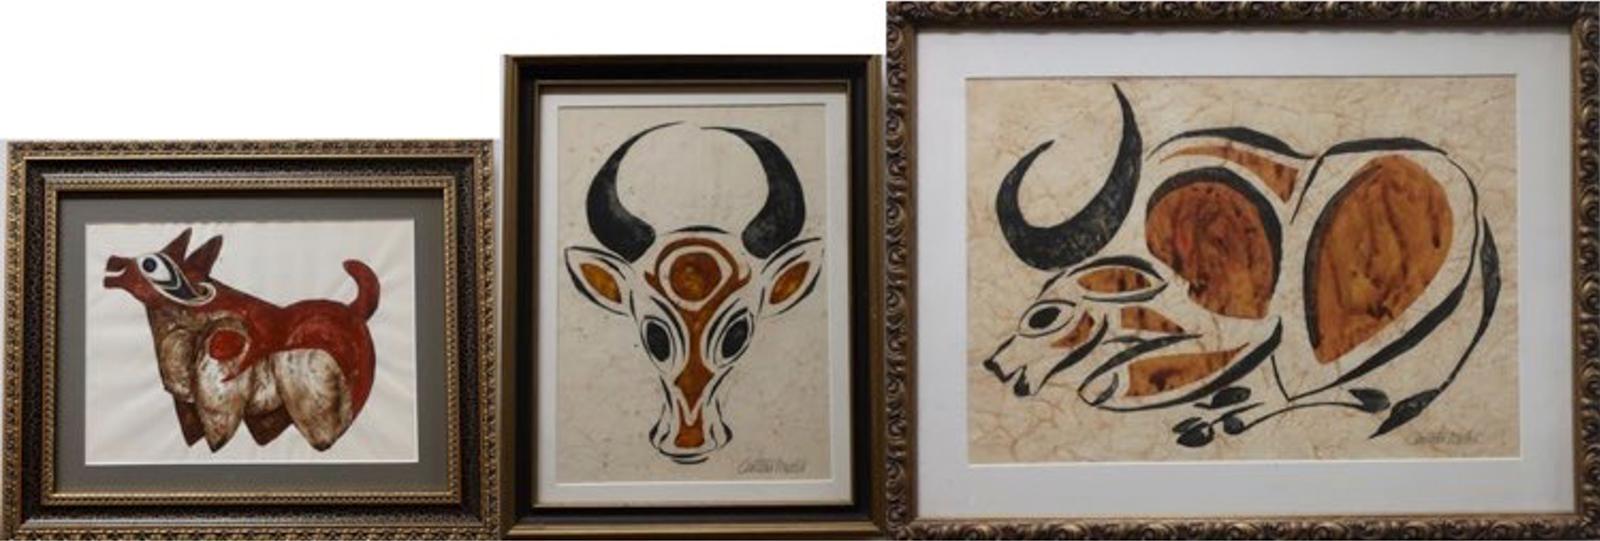 Cawthra Mulock (1915-1998) - Three Animals